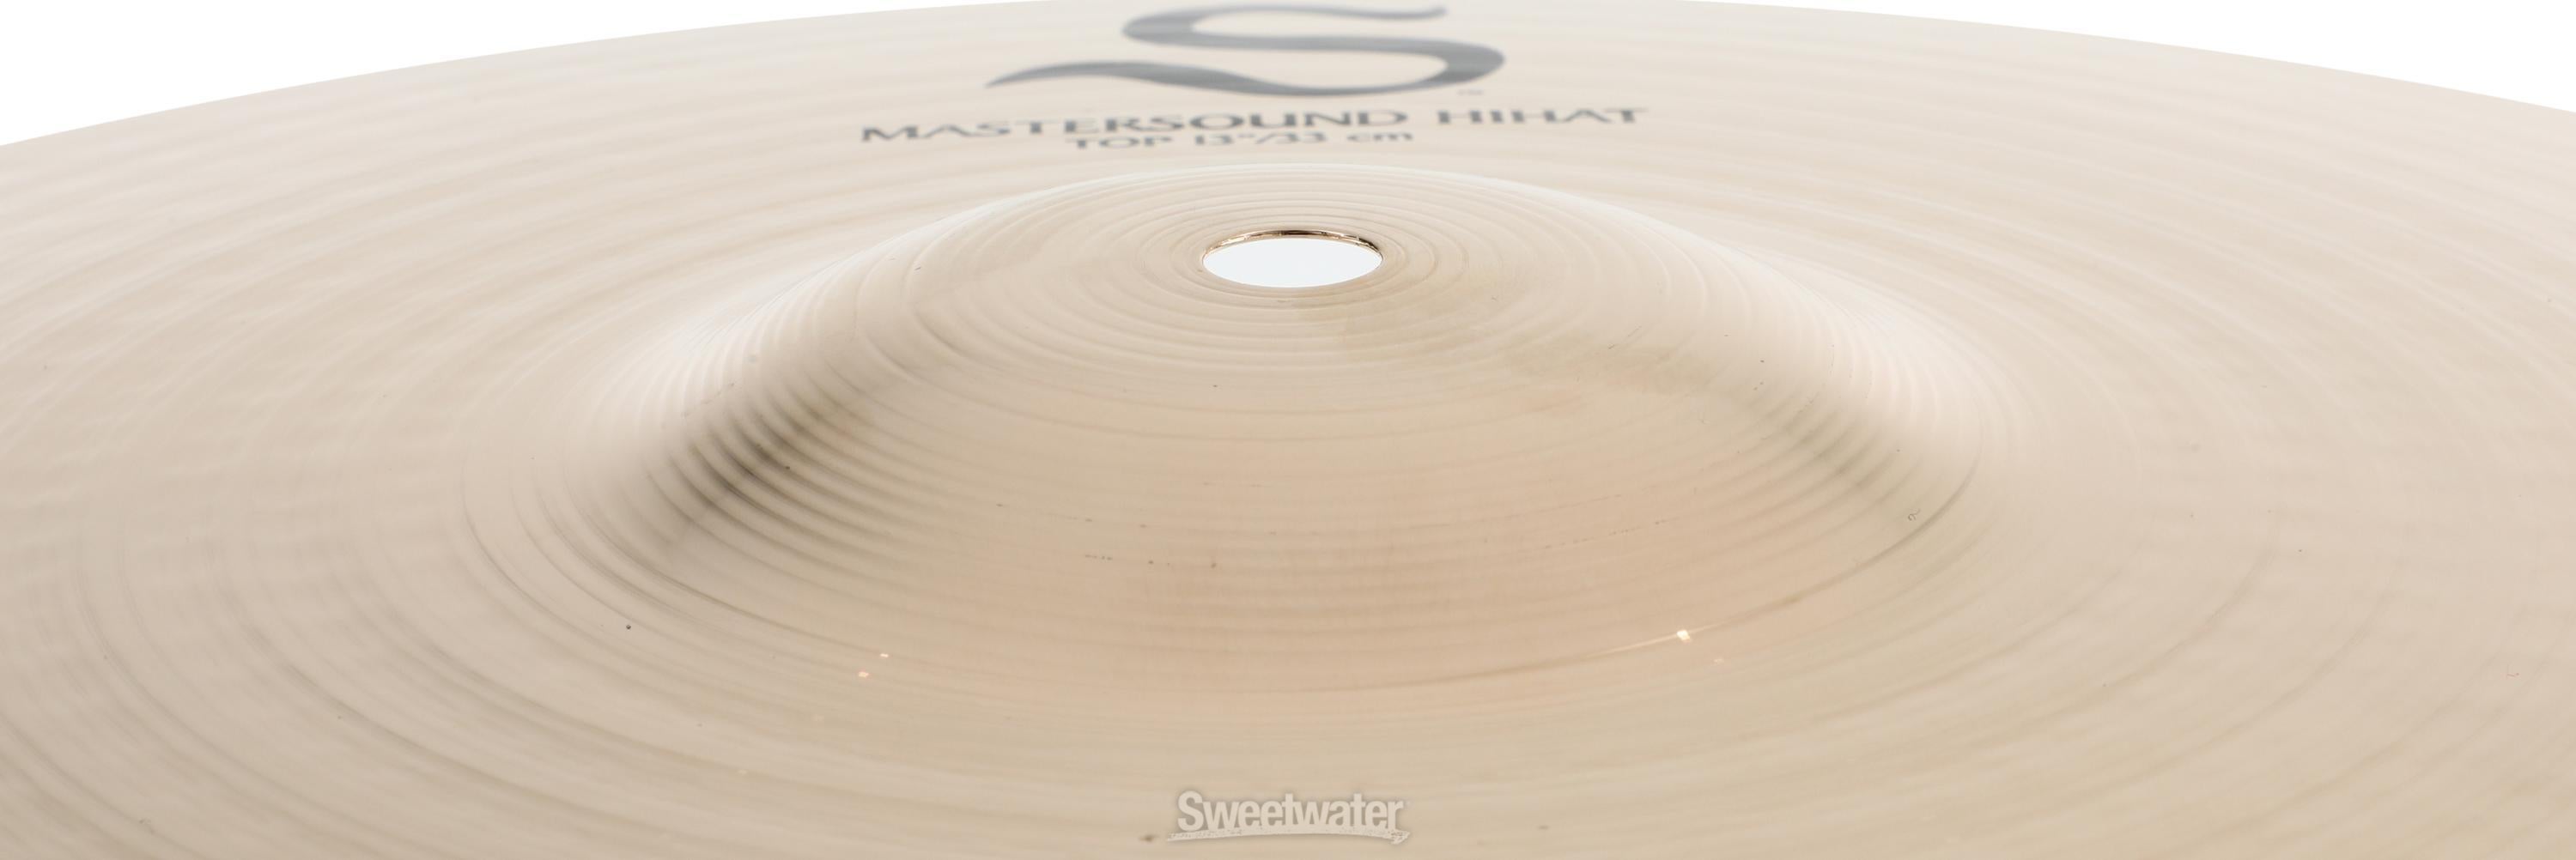 Zildjian 13 inch S Series Mastersound Hi-hat Cymbals | Sweetwater